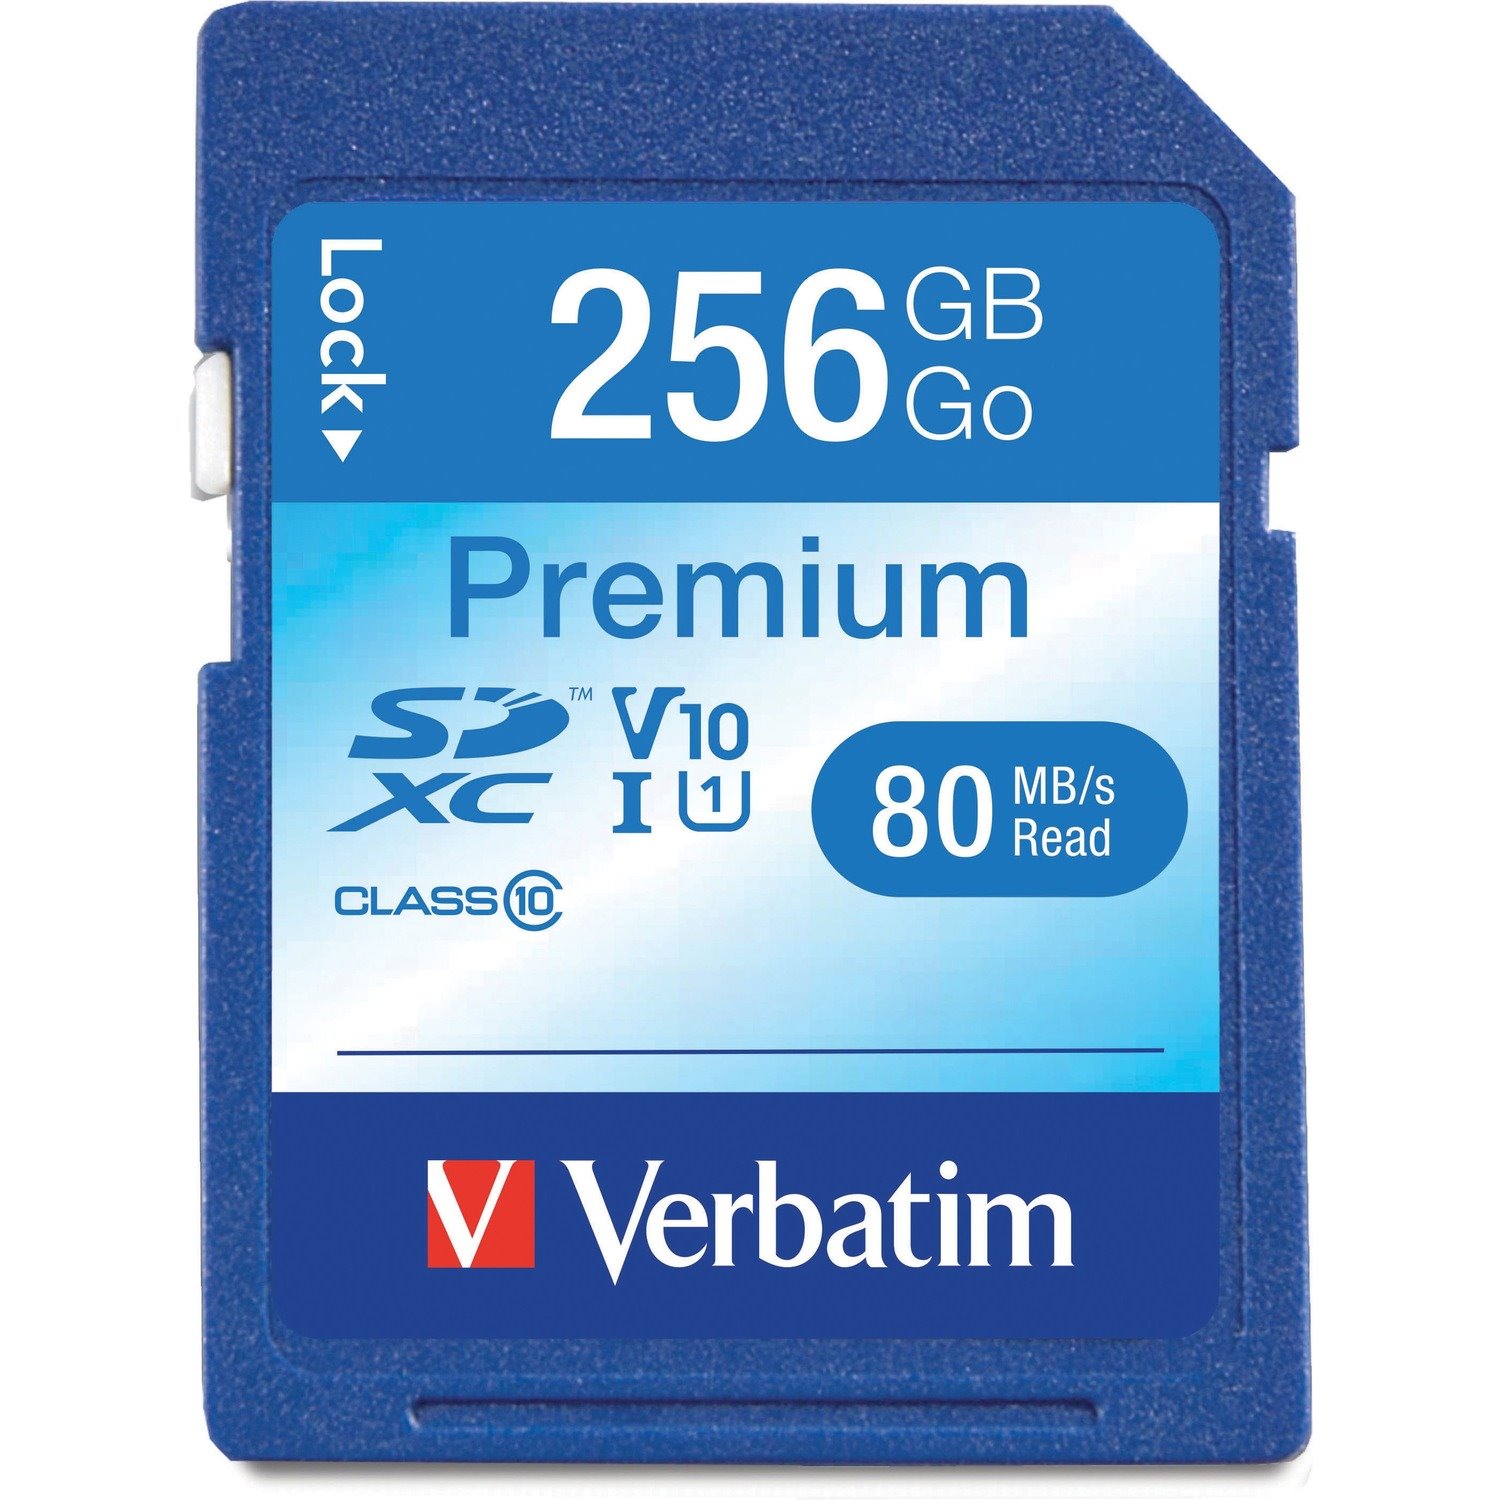 Verbatim 256GB Premium SDXC Memory Card, UHS-I V10 U1 Class 10